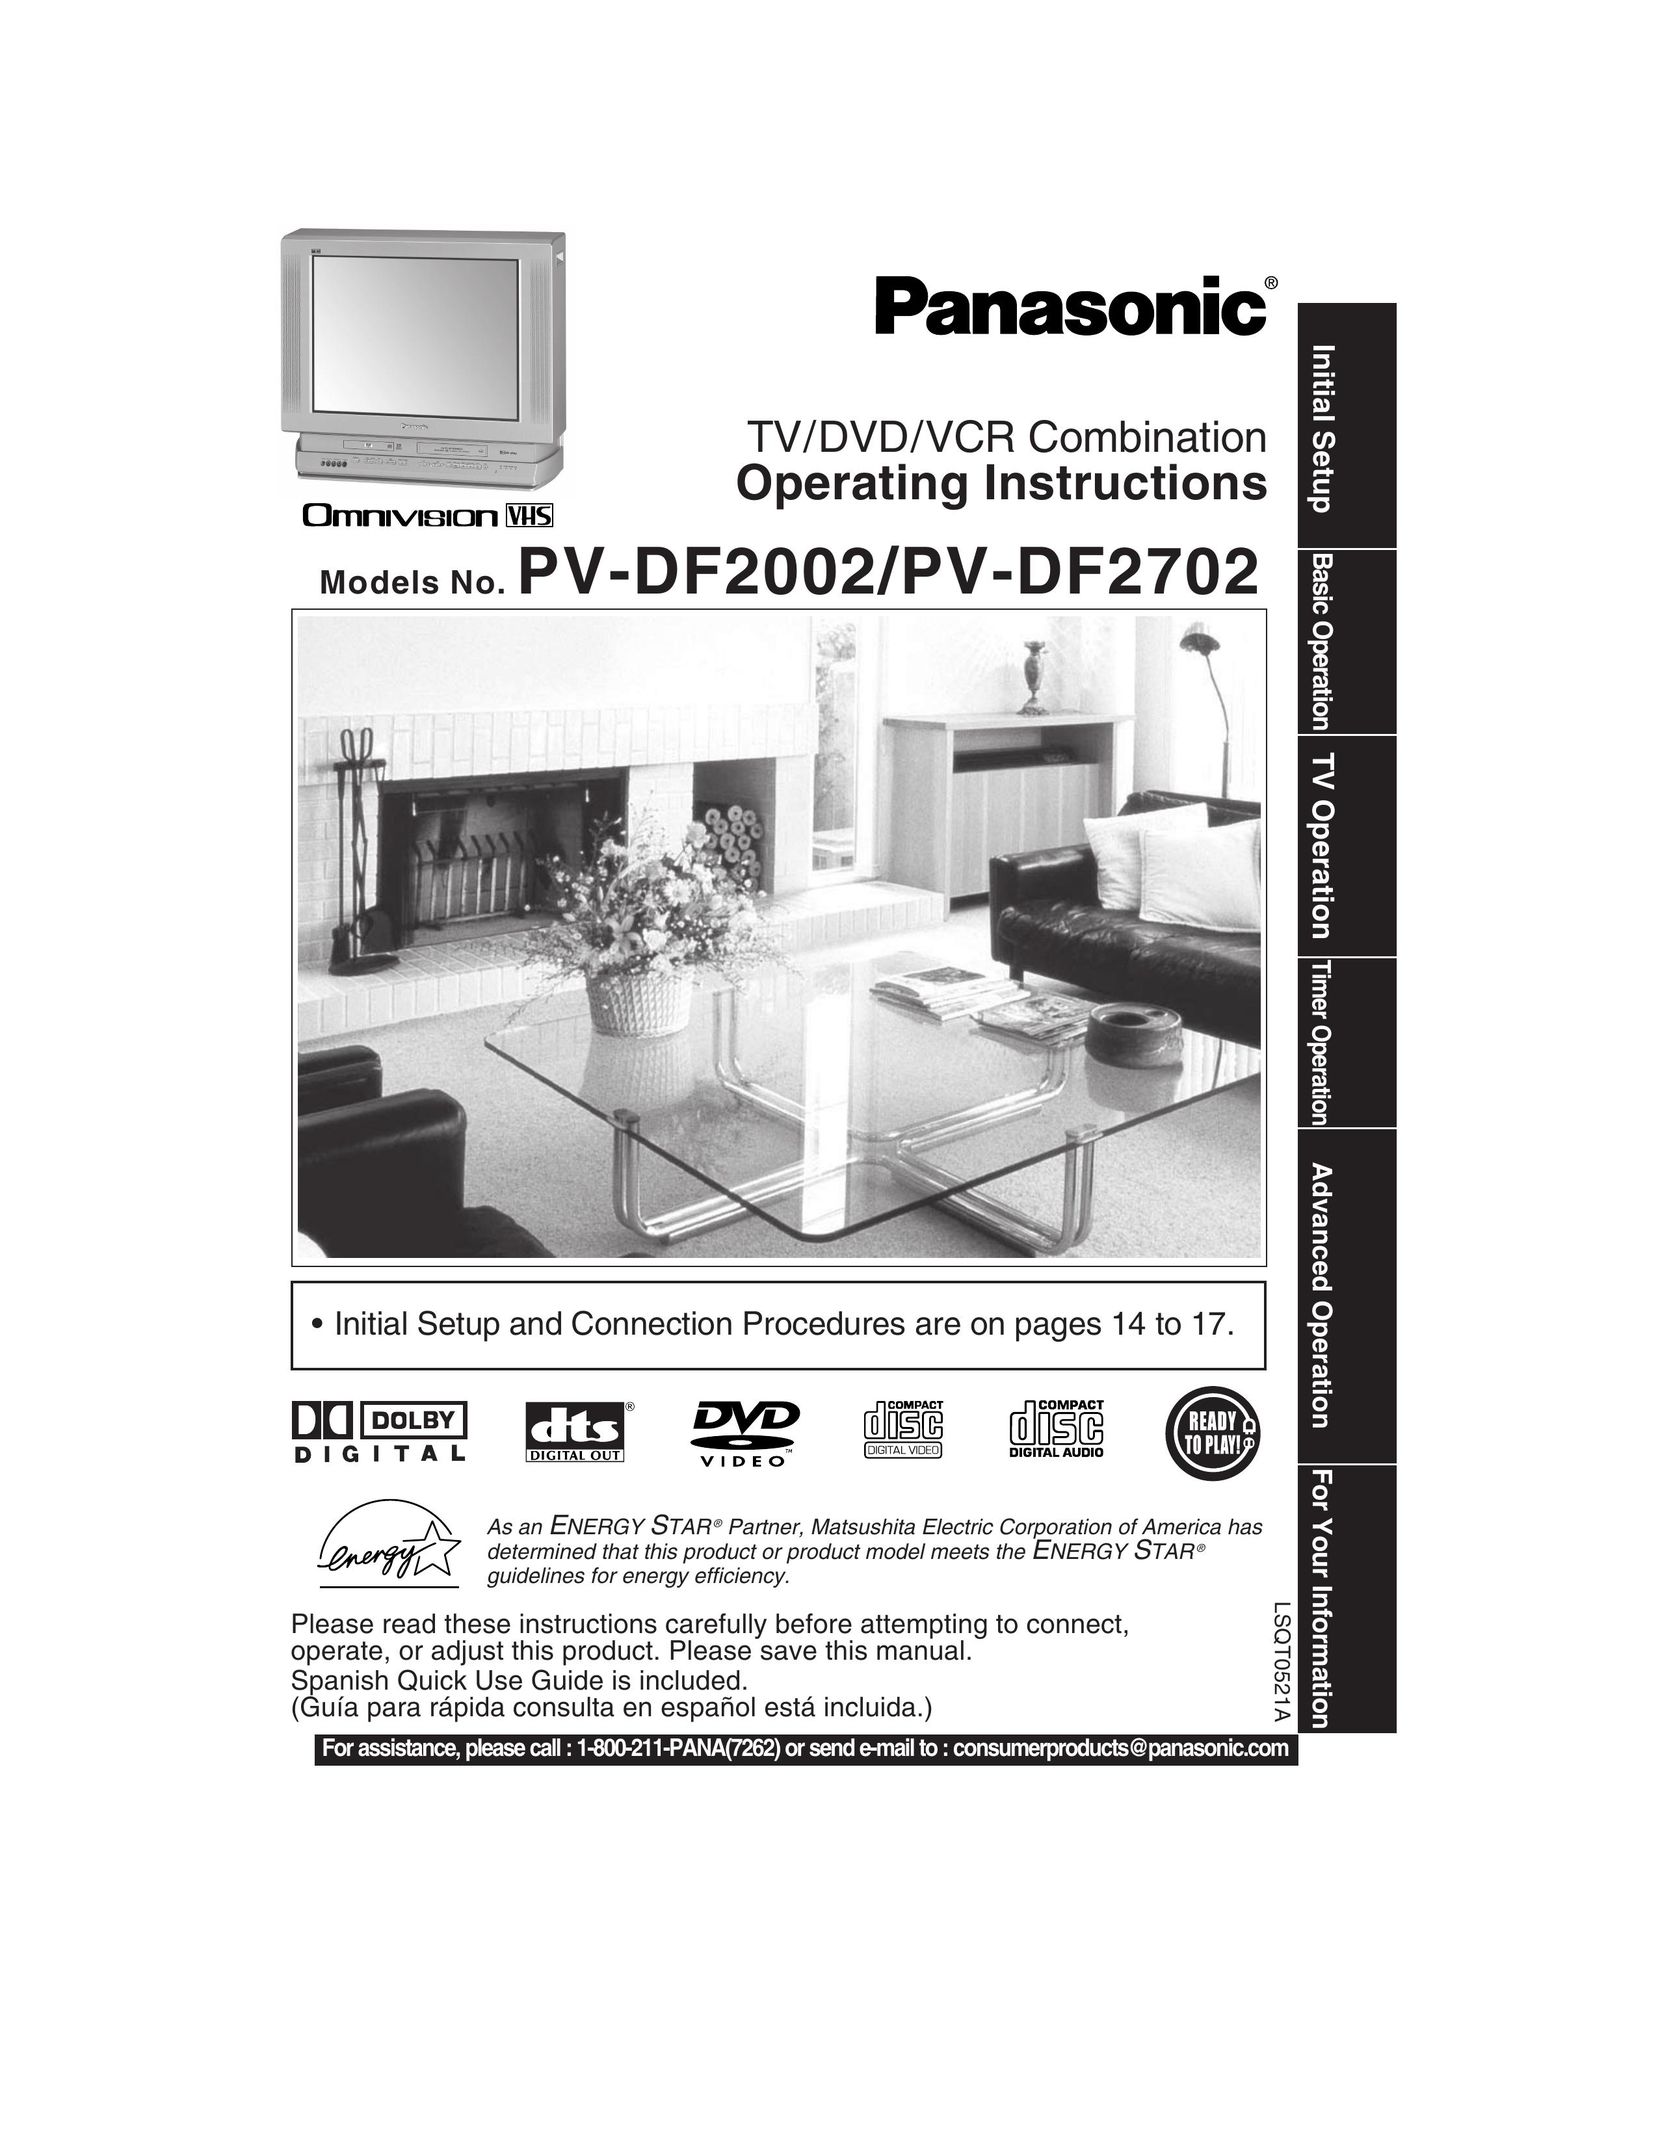 Panasonic PV DF2702 DVD VCR Combo User Manual